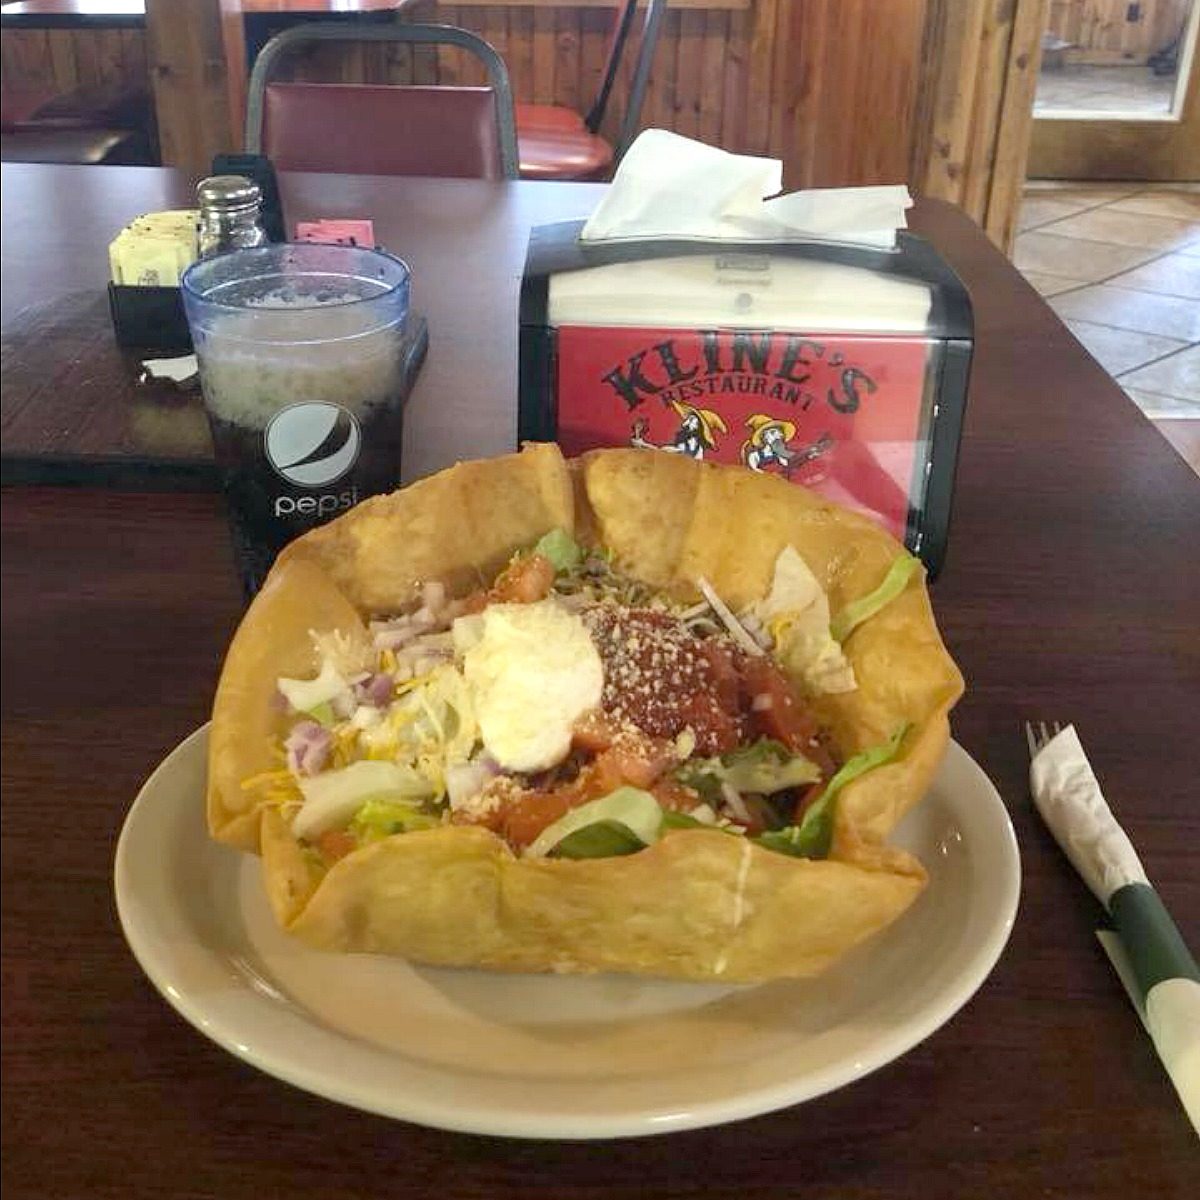 Taco salad at Kline's Restaurant